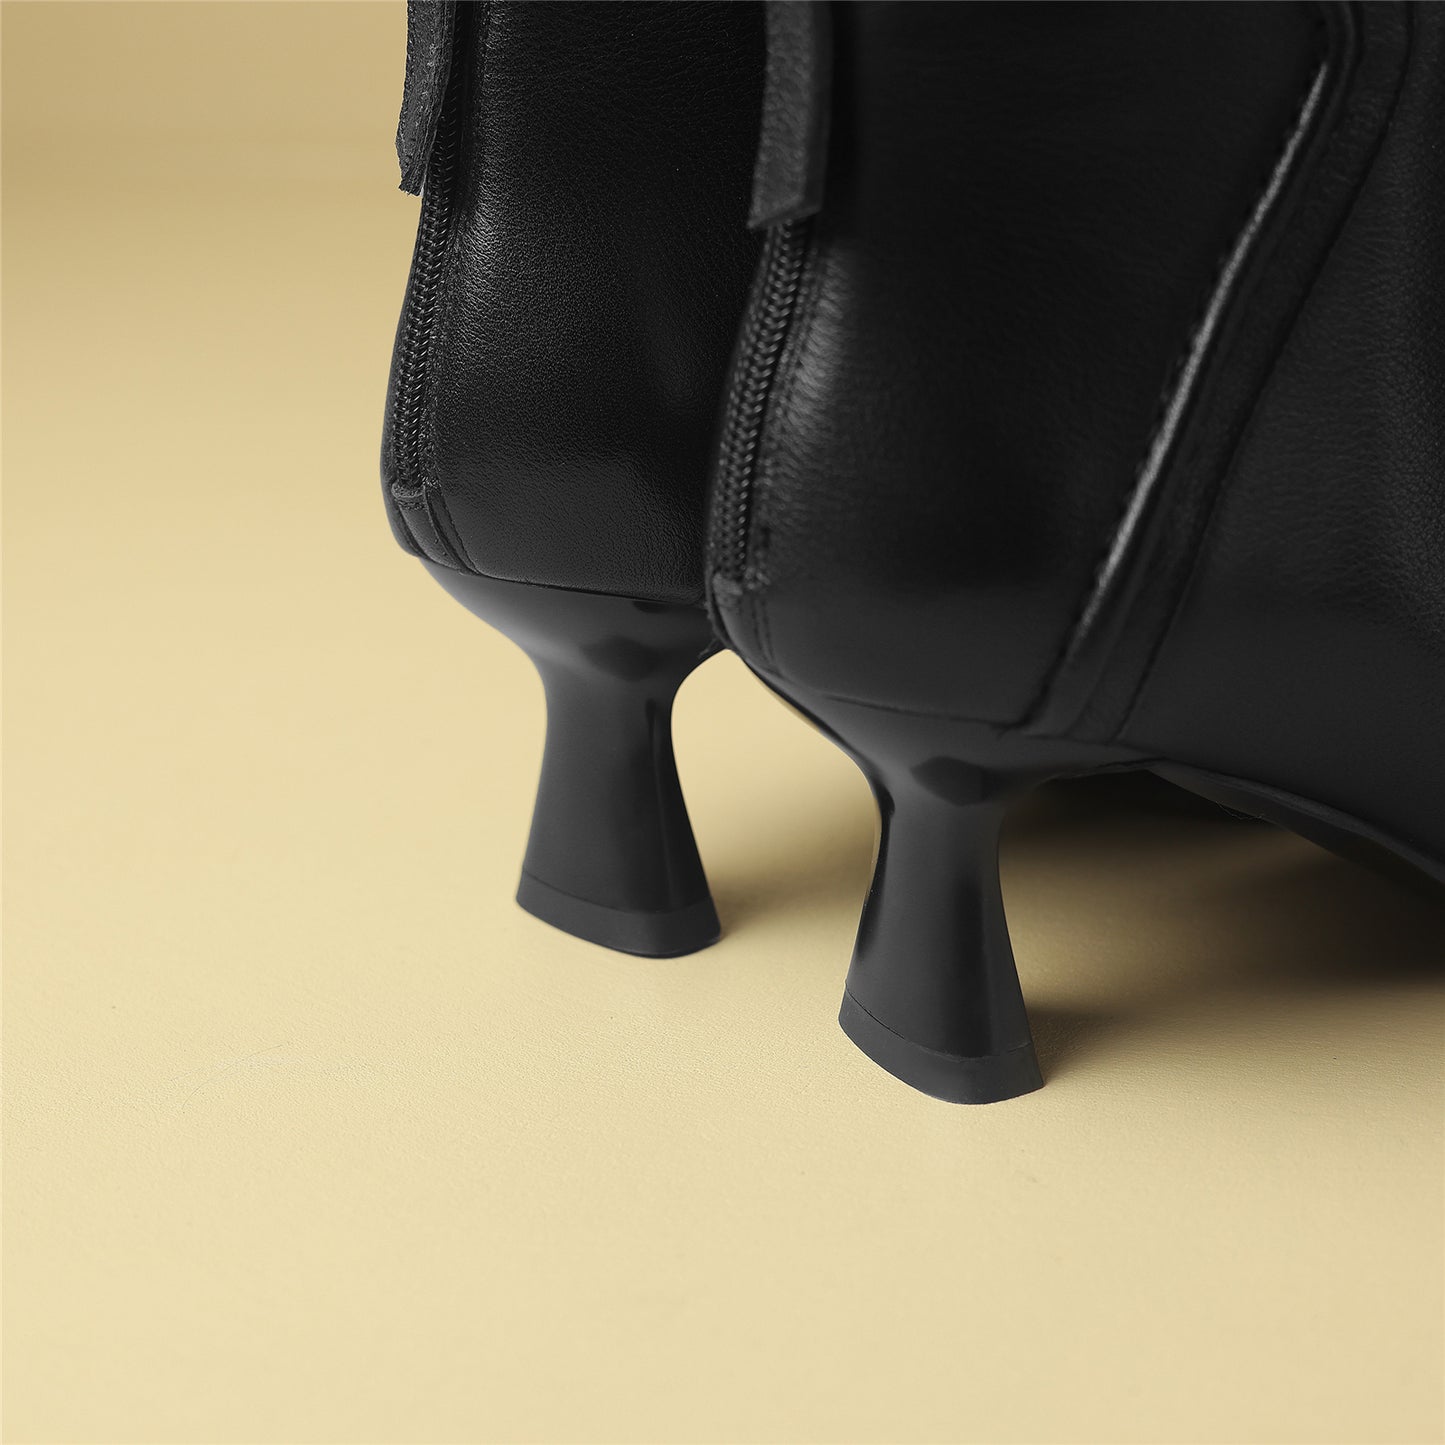 TinaCus Women's Genuine Leather Handmade Back Zip Up Kitten Heel Ankle Boots